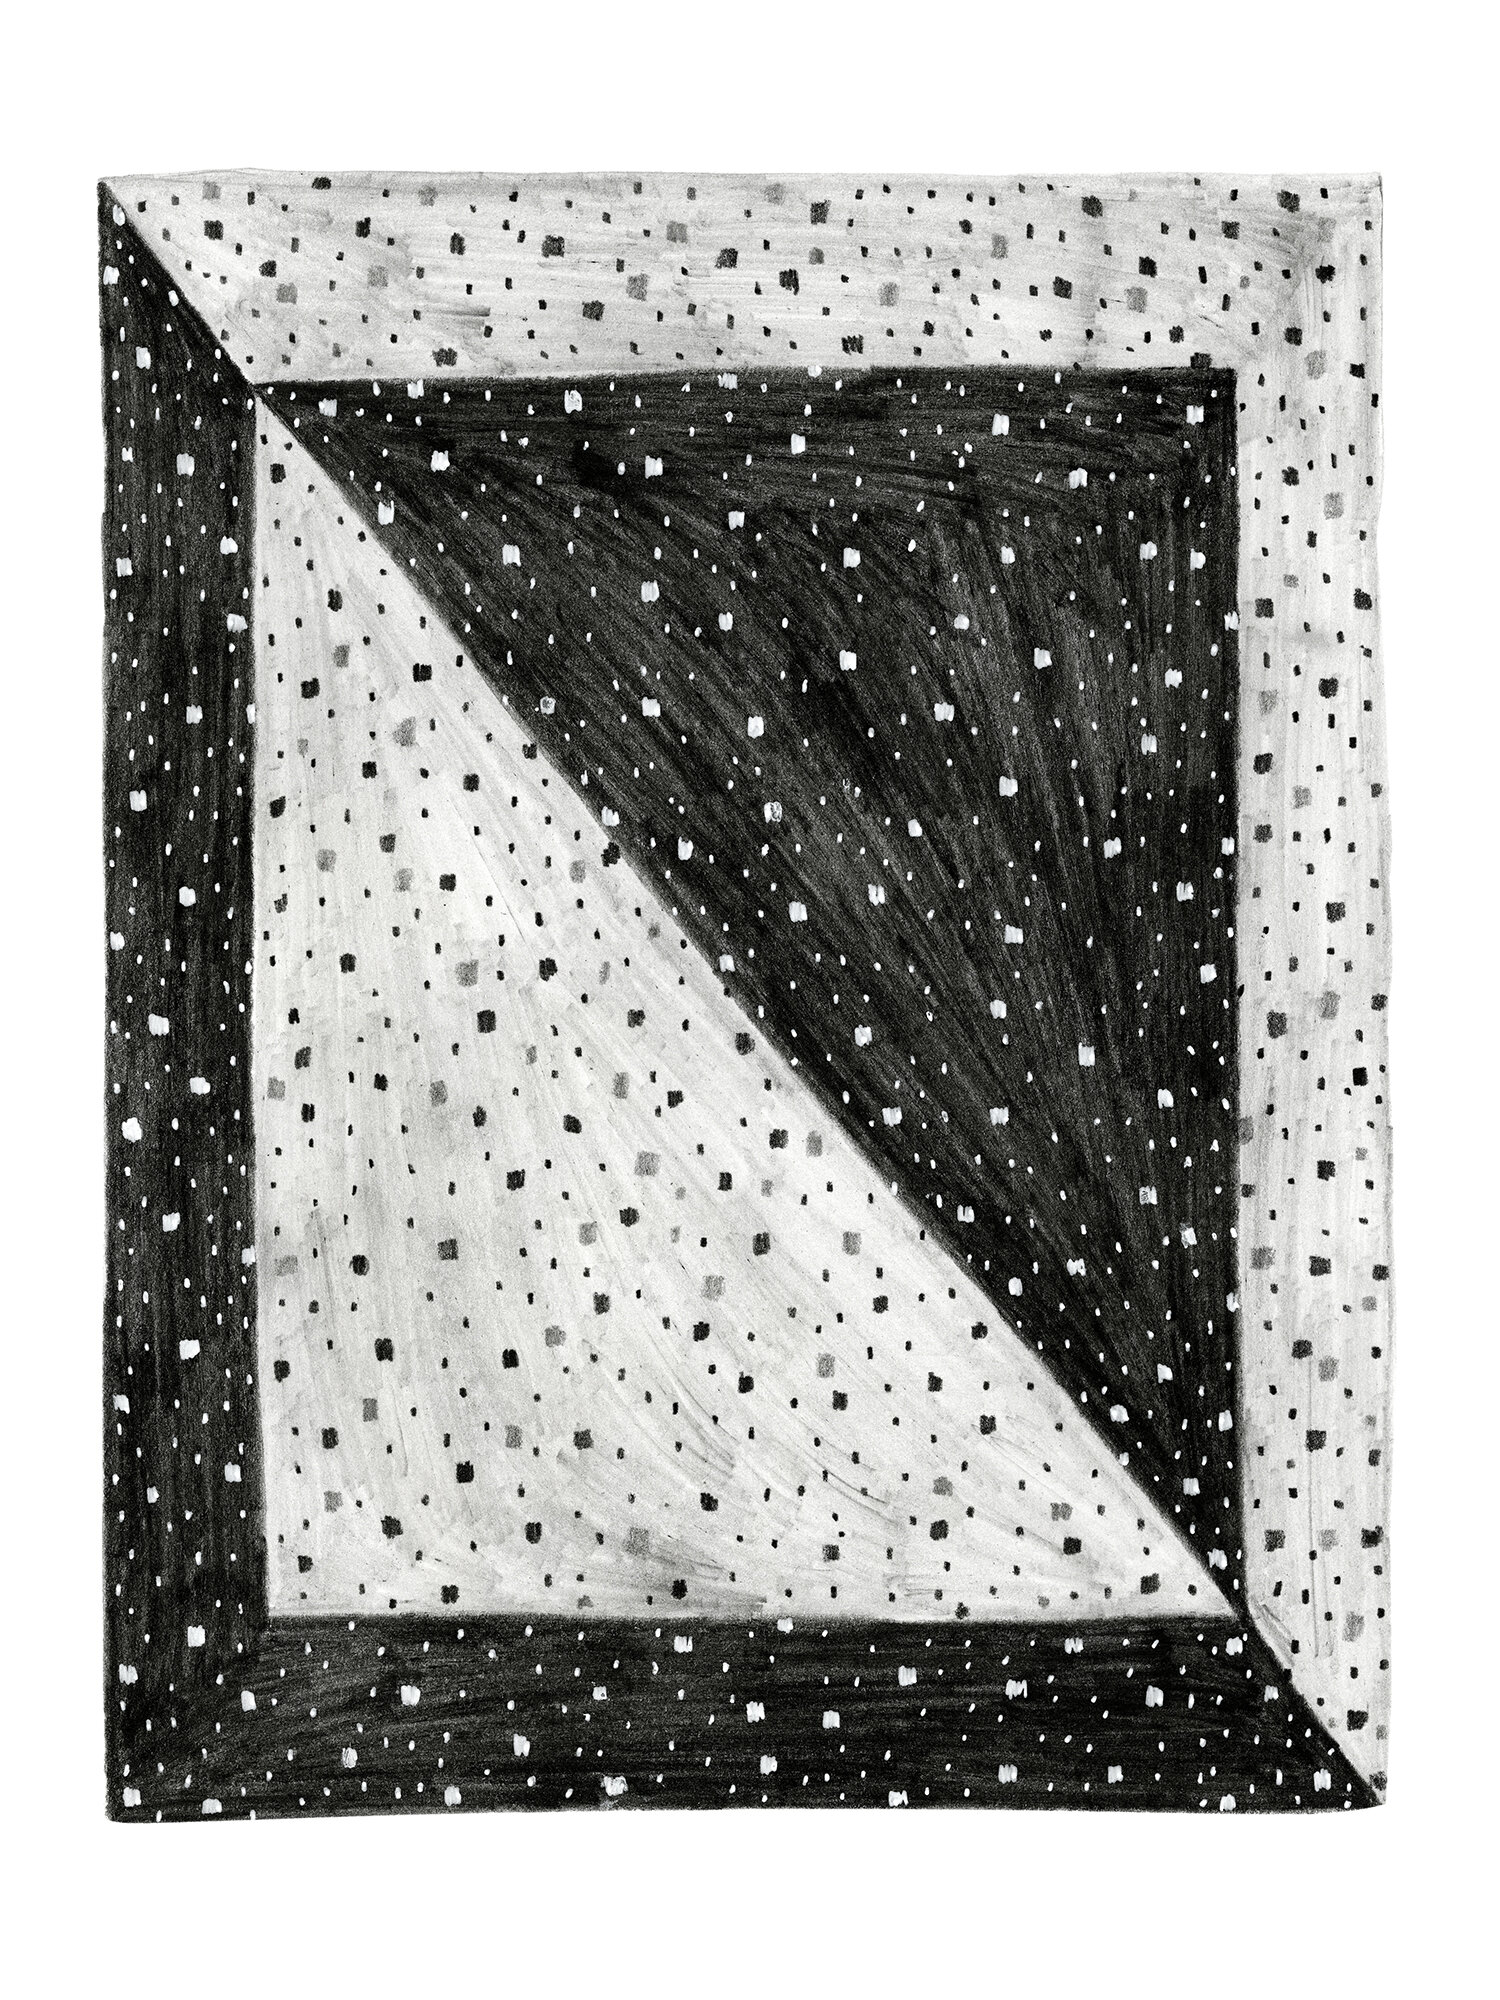   Dark &amp; Light Stars Rug   Pencil on paper  12 x 9 inches    